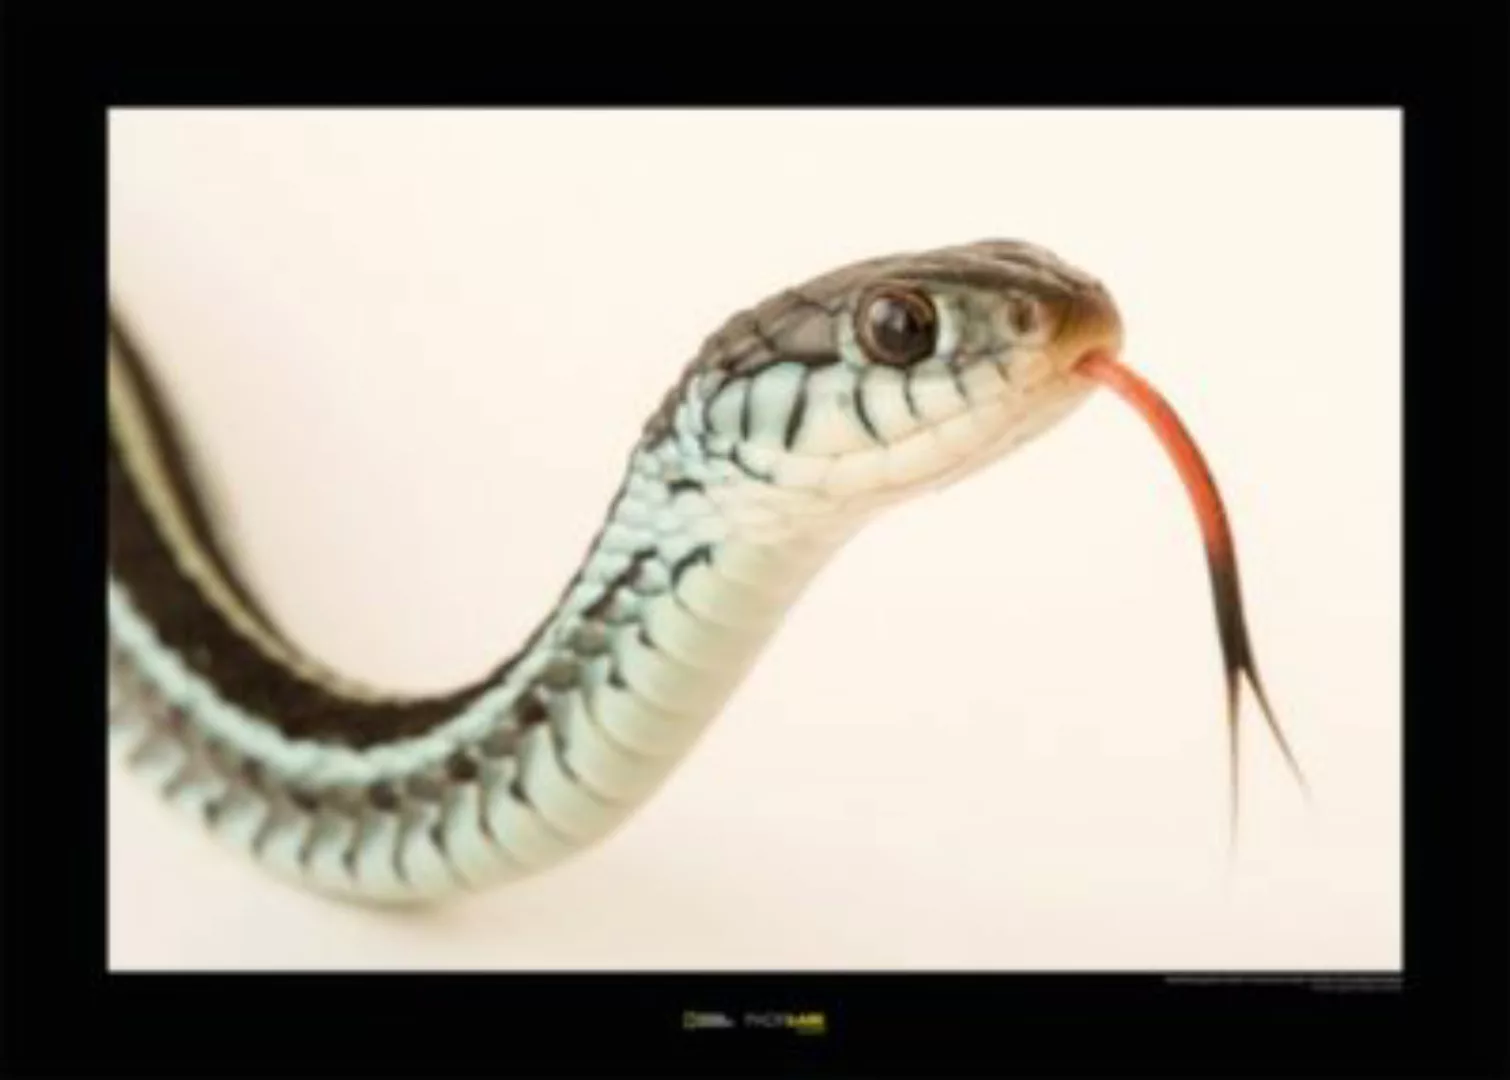 KOMAR Wandbild - Bluestripe Garter Snake - Größe: 70 x 50 cm mehrfarbig Gr. günstig online kaufen